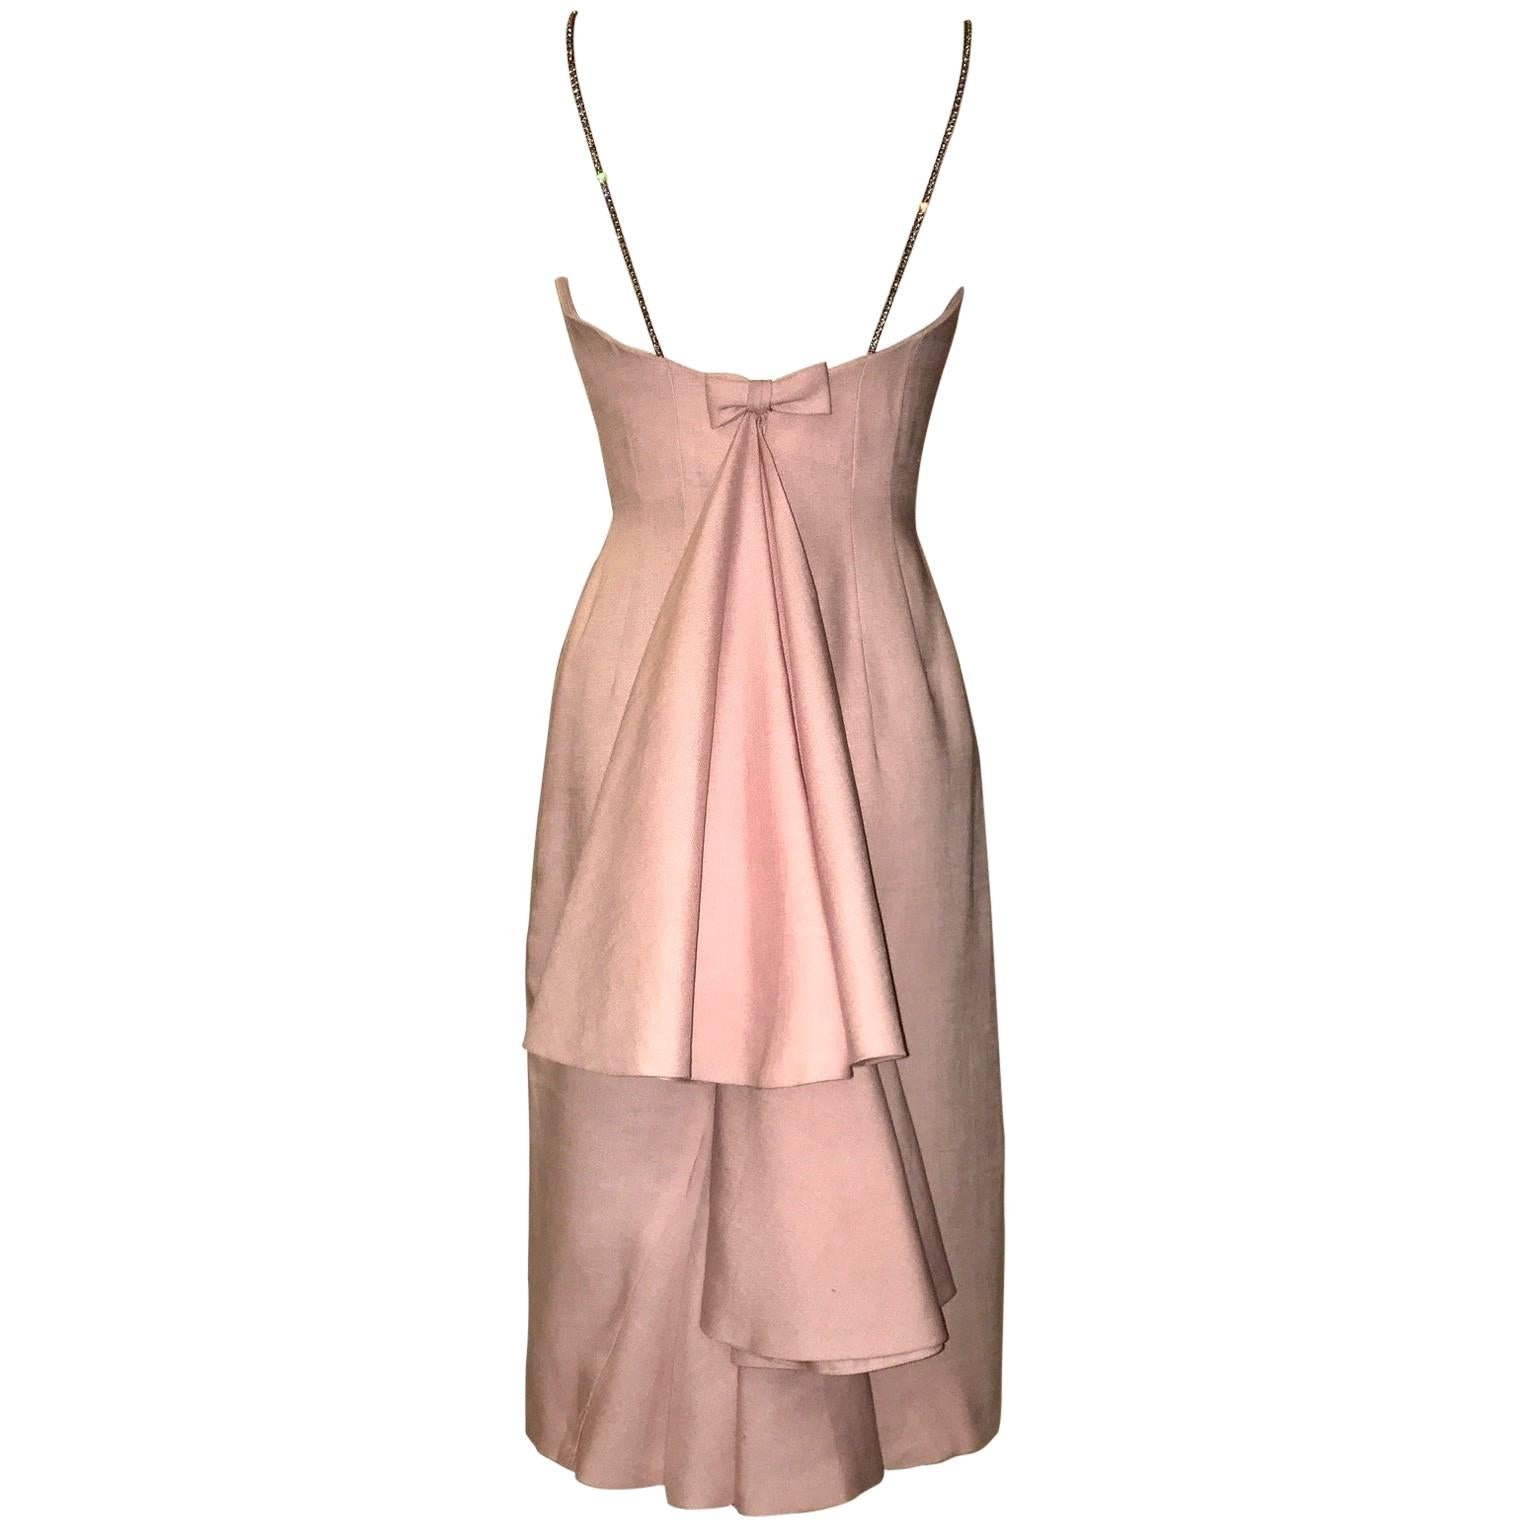 Mr. Blackwell Rhinestone Strap Pink Linen Tiered Fishtail Dress, circa 1959